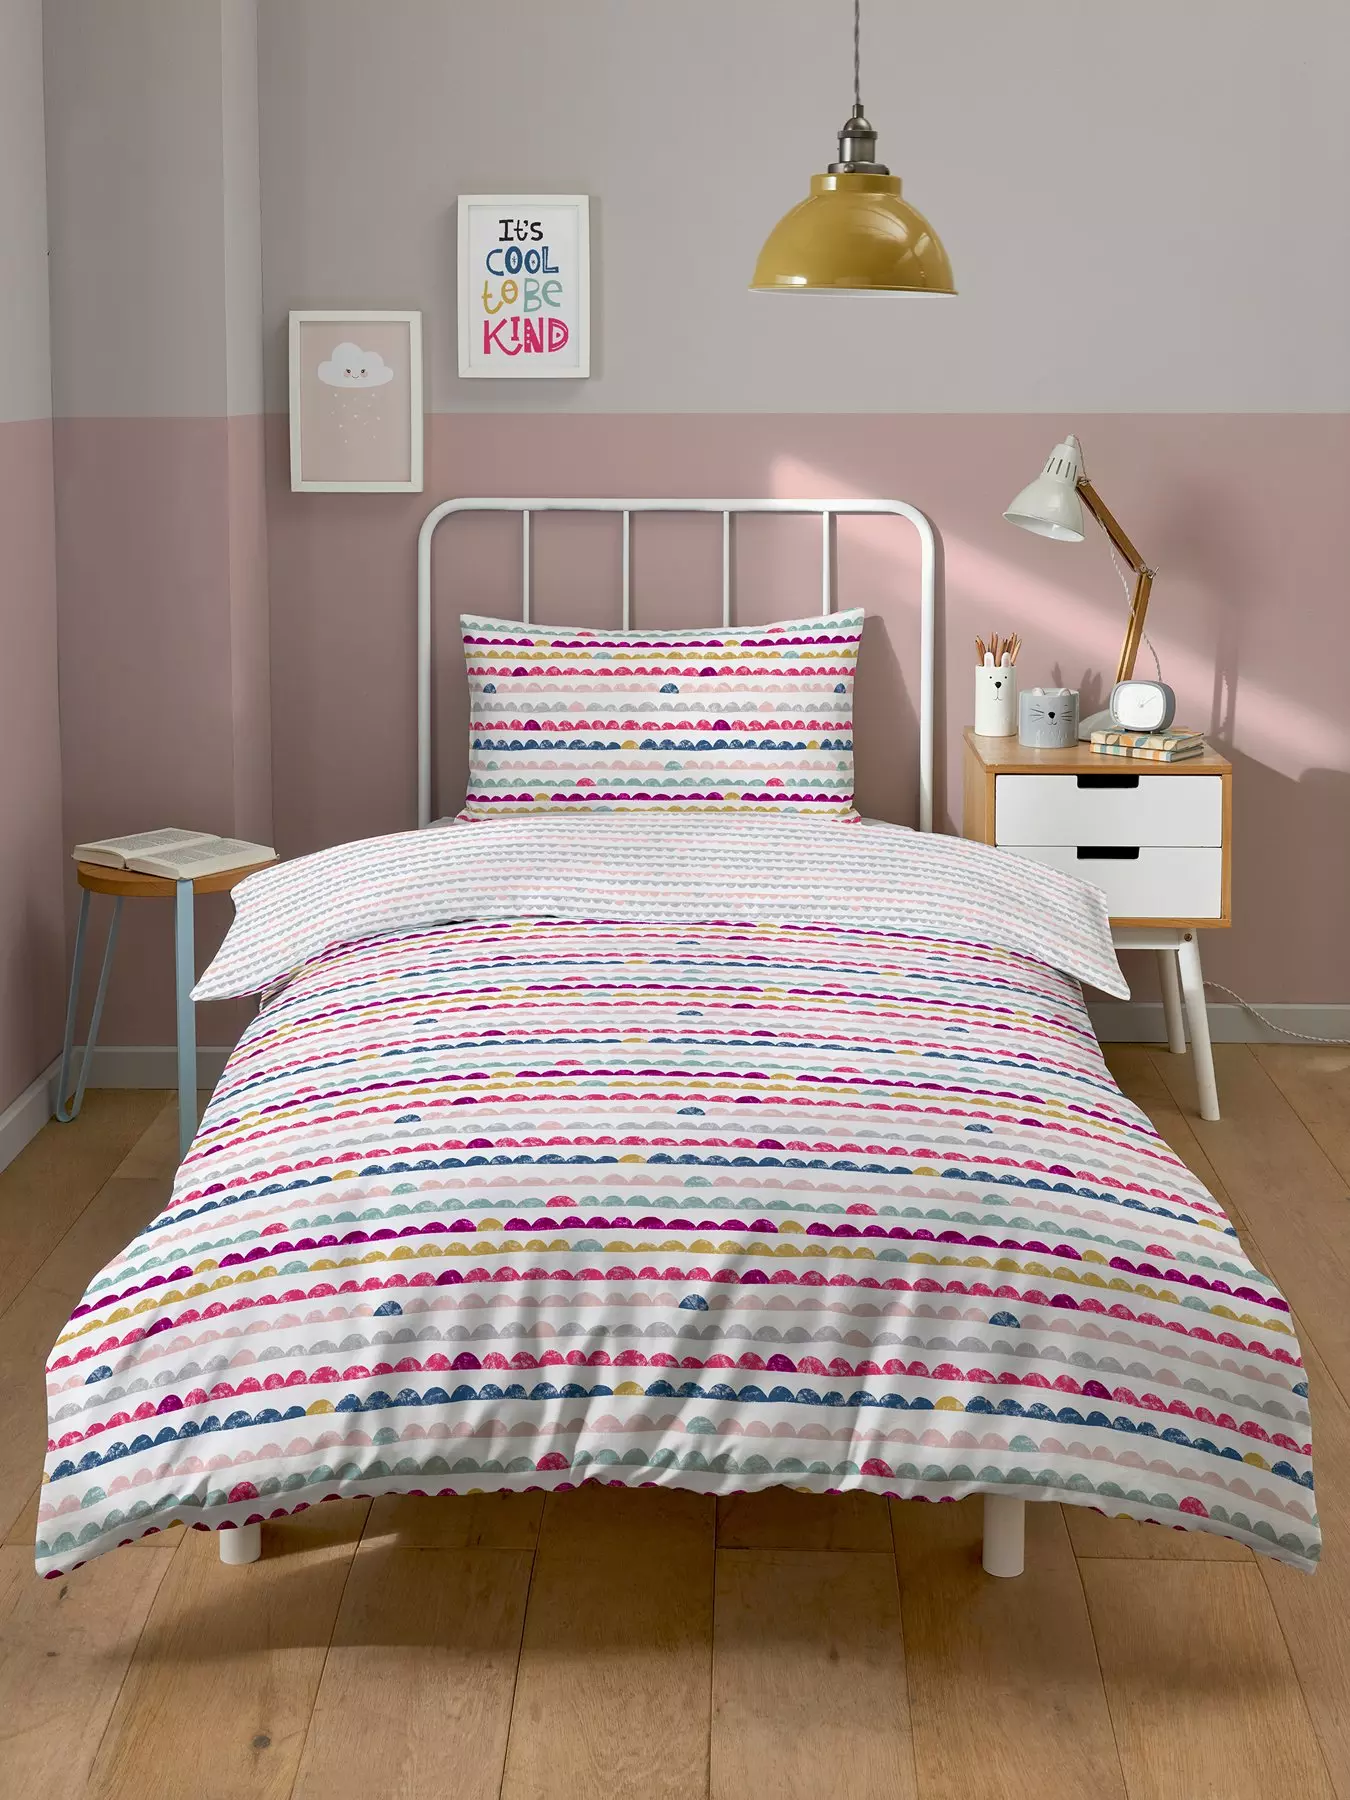 Adairs Kids - Pretty Pink Daisies Sheer Curtains - Set of 2